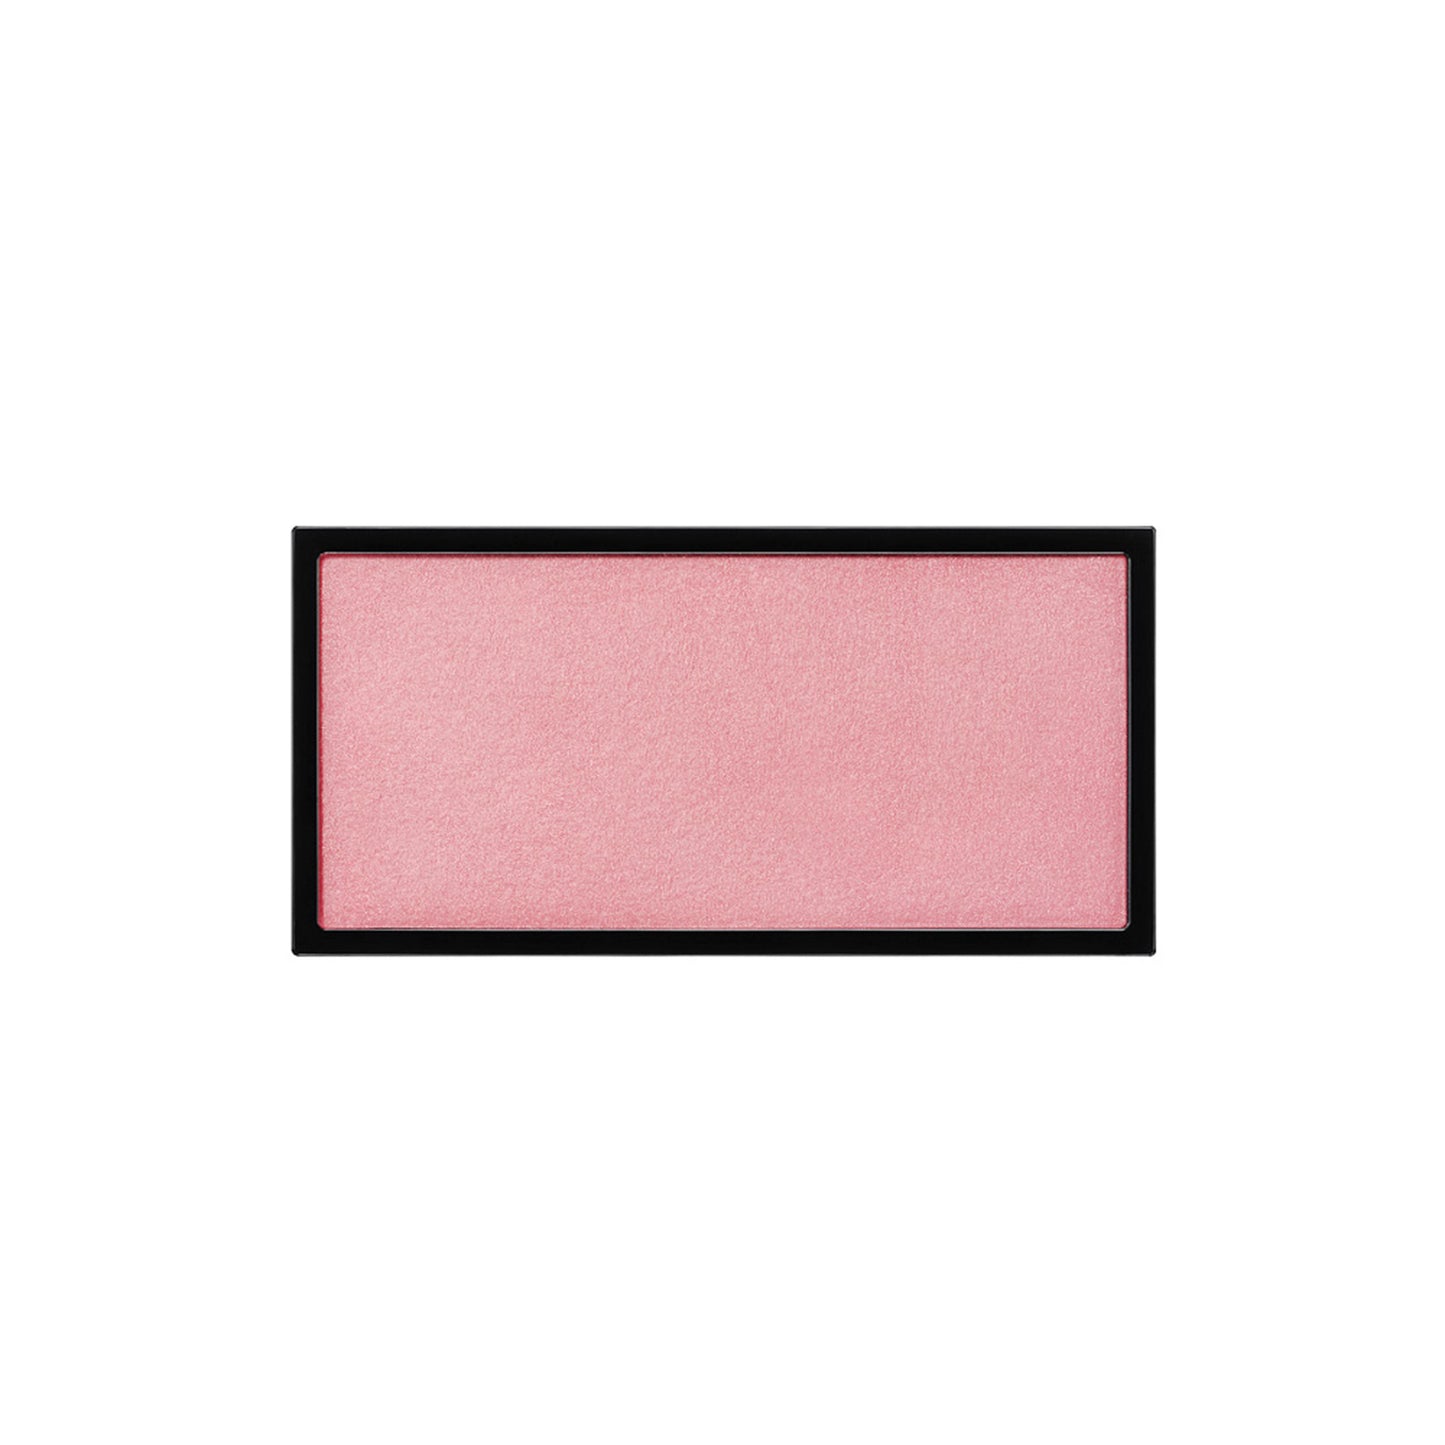 A rectangle shaped powder blush pan in a pale rose tone